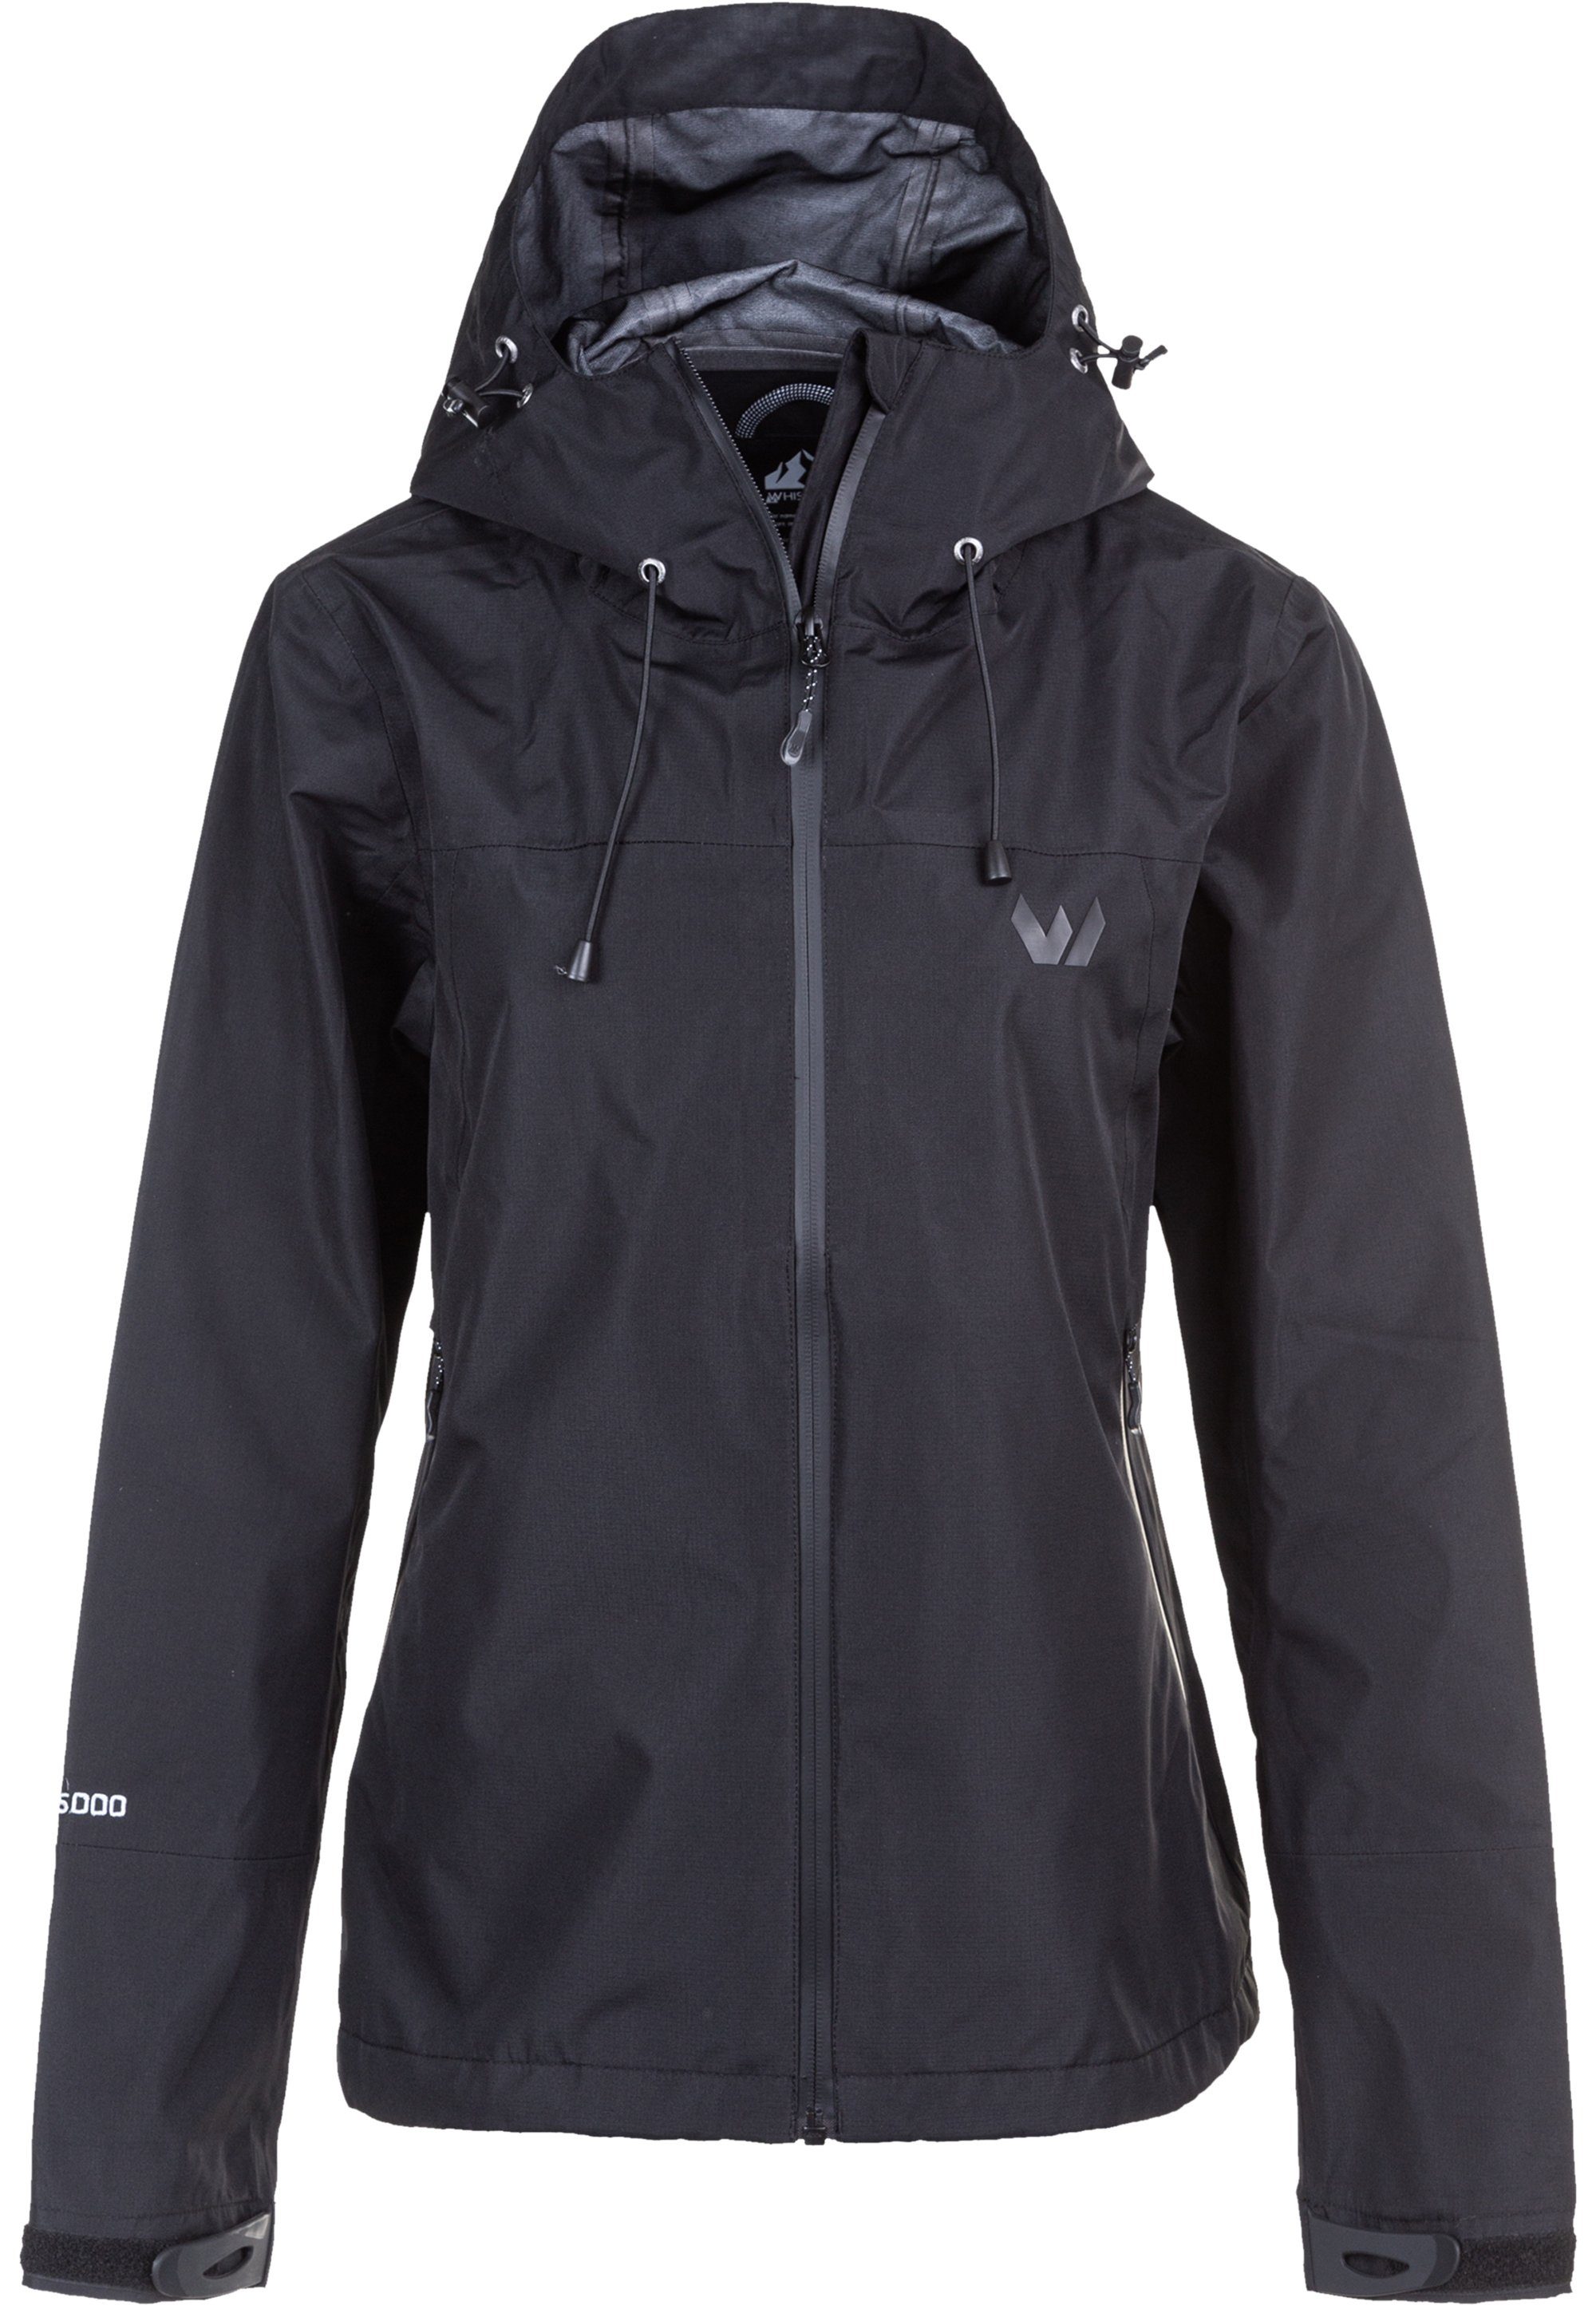 WHISTLER Softshelljacke BROOK W Shell W-PRO mit praktischer Kapuze schwarz 15000 Jacket